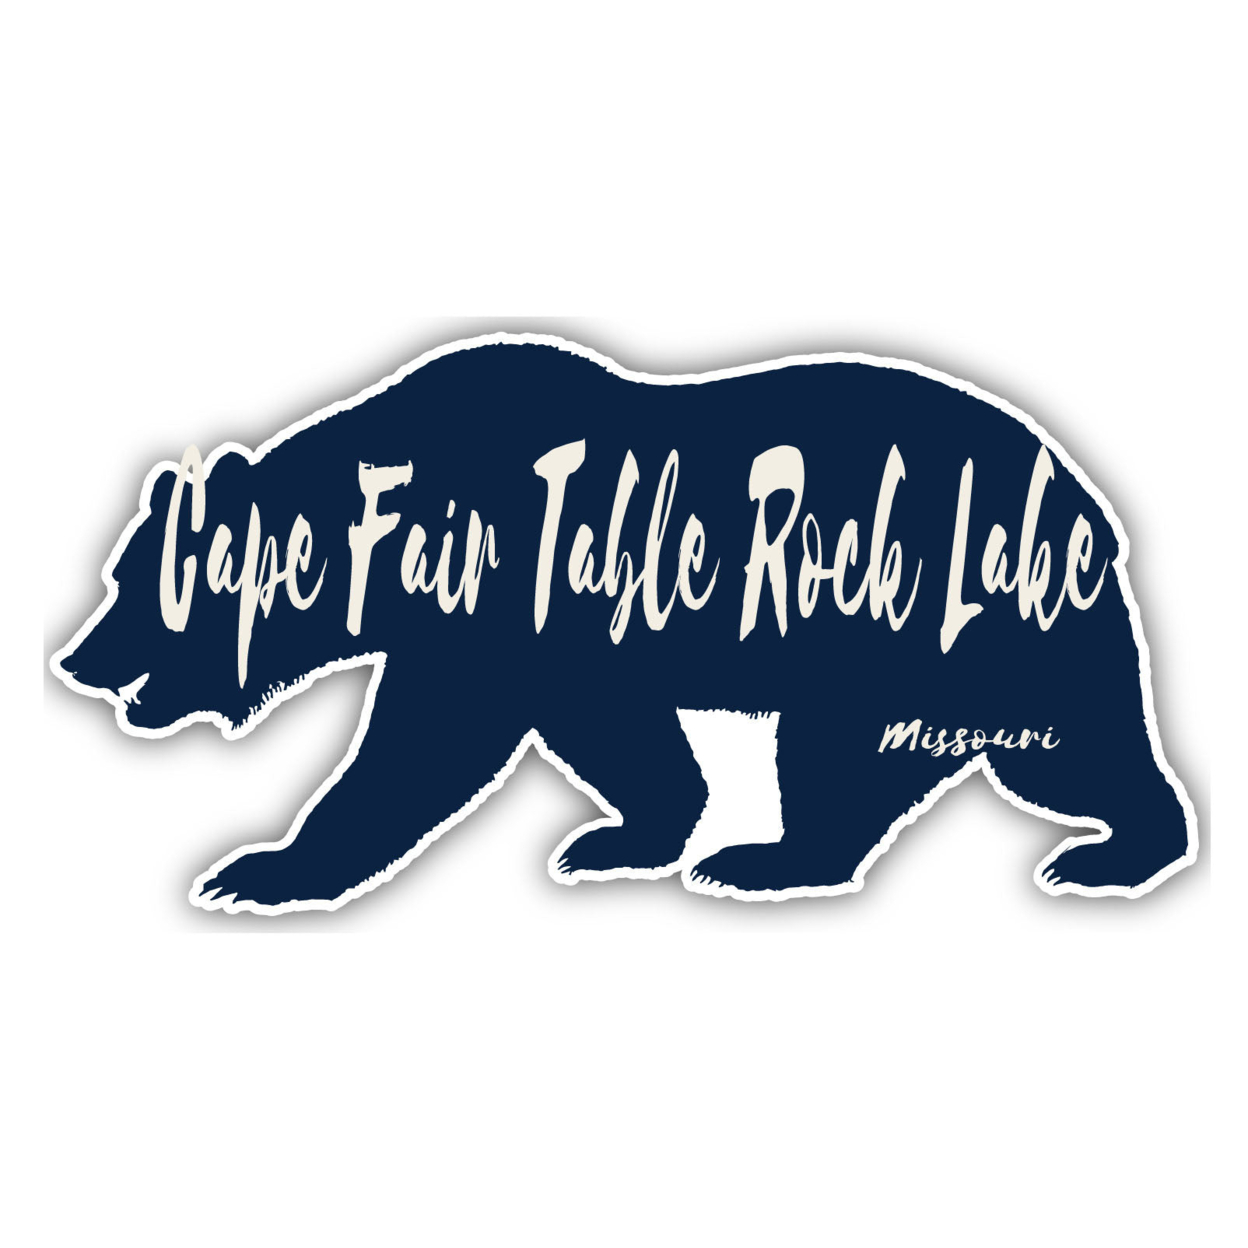 Cape Fair Table Rock Lake Missouri Souvenir Decorative Stickers (Choose Theme And Size) - 4-Pack, 8-Inch, Bear